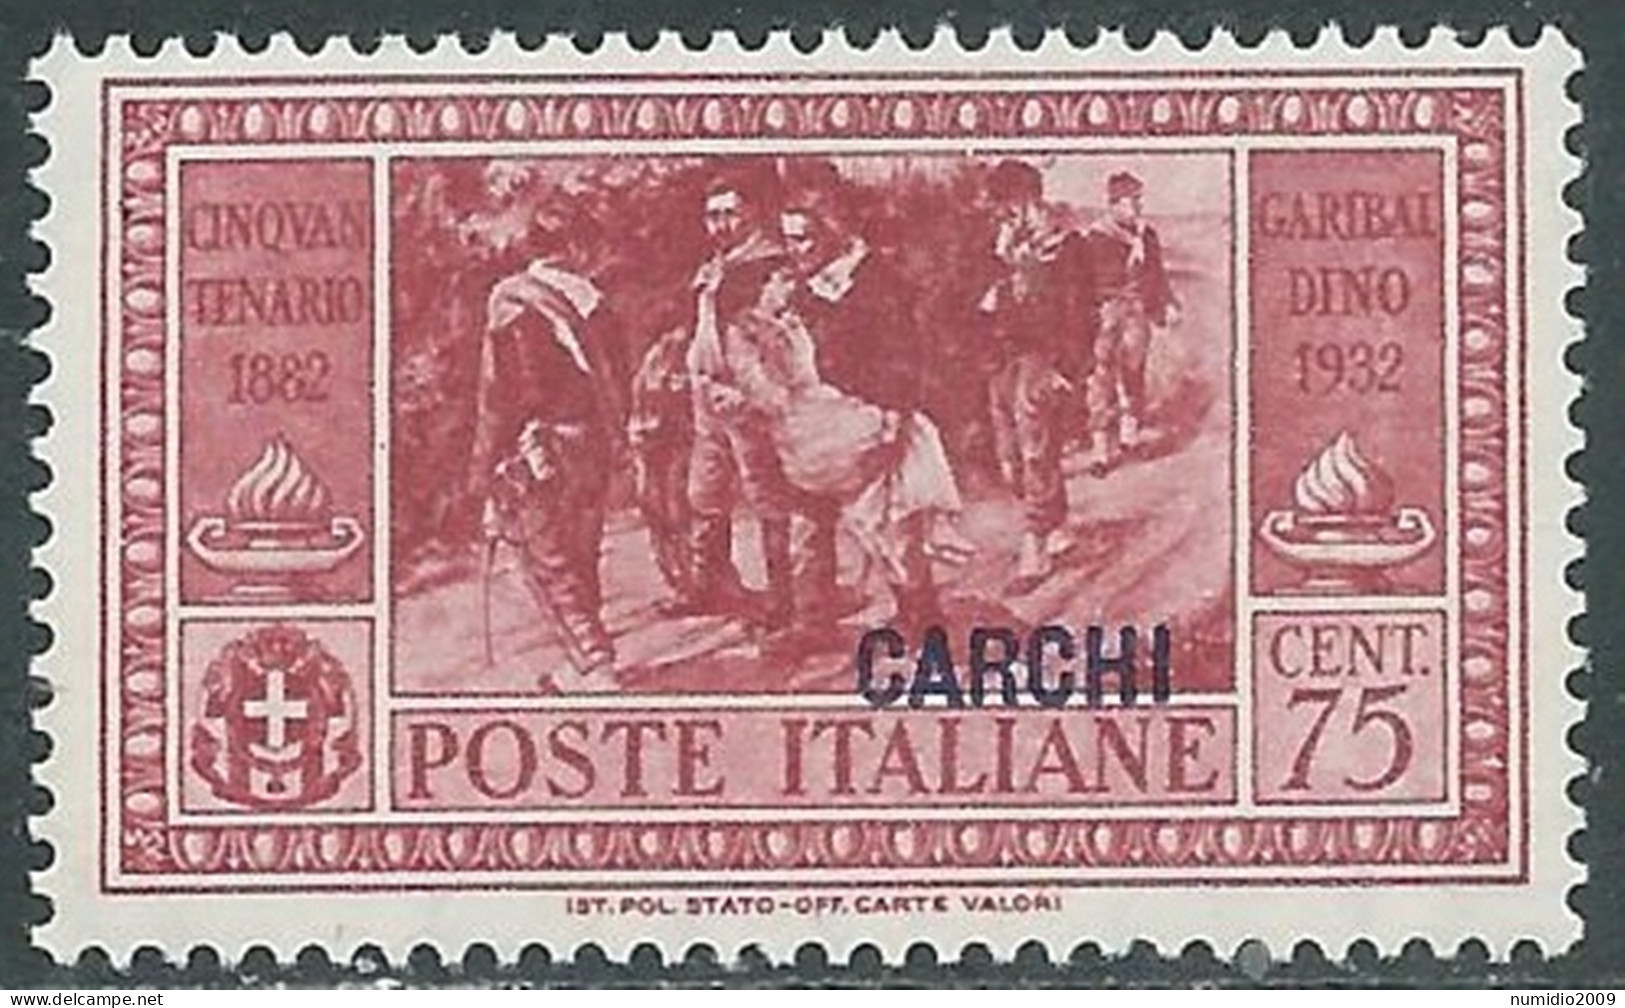 1932 EGEO CARCHI GARIBALDI 75 CENT MNH ** - I45-6 - Egeo (Carchi)